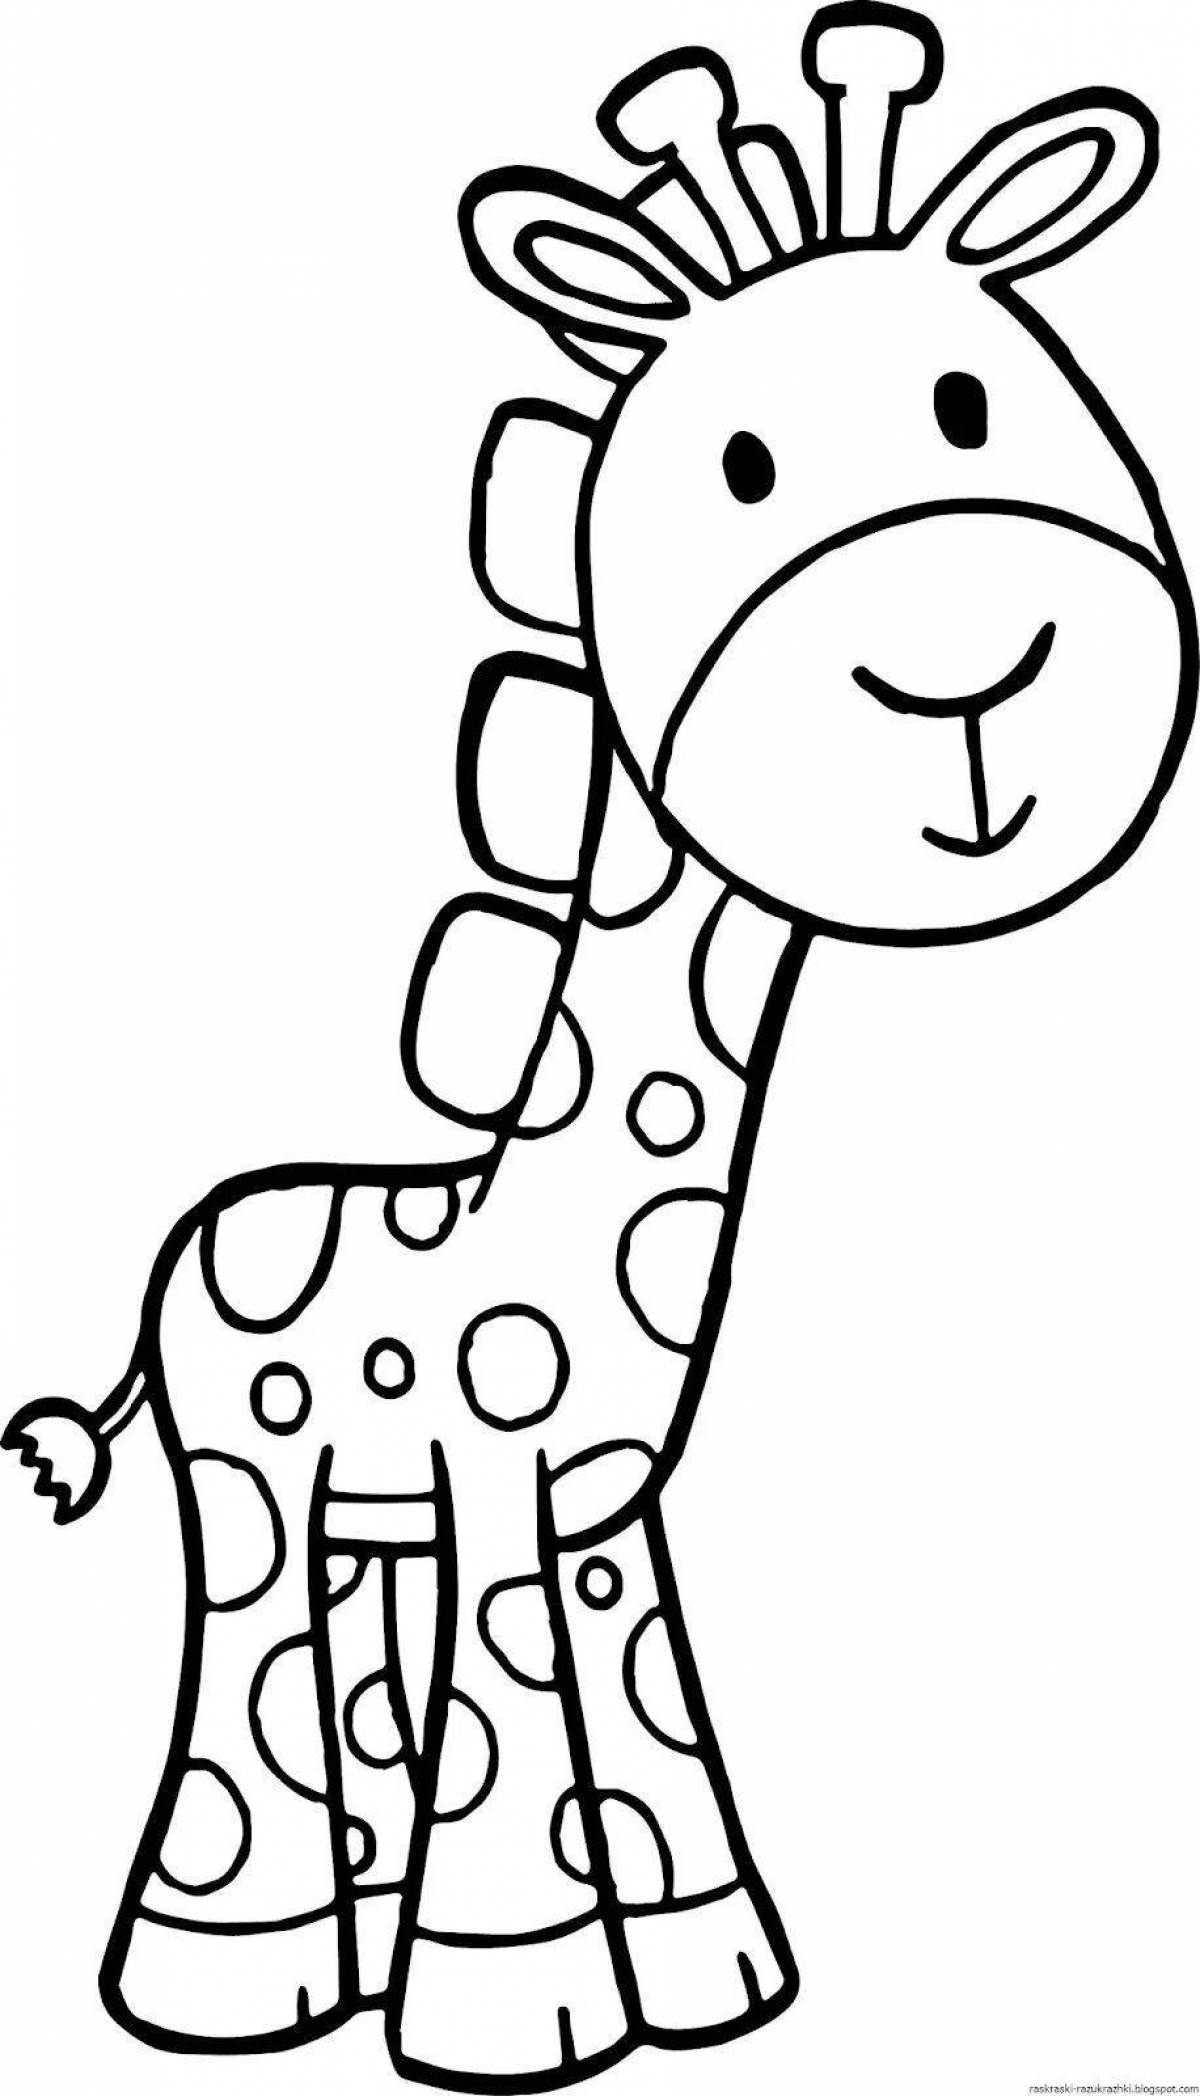 Giraffe picture for kids #8